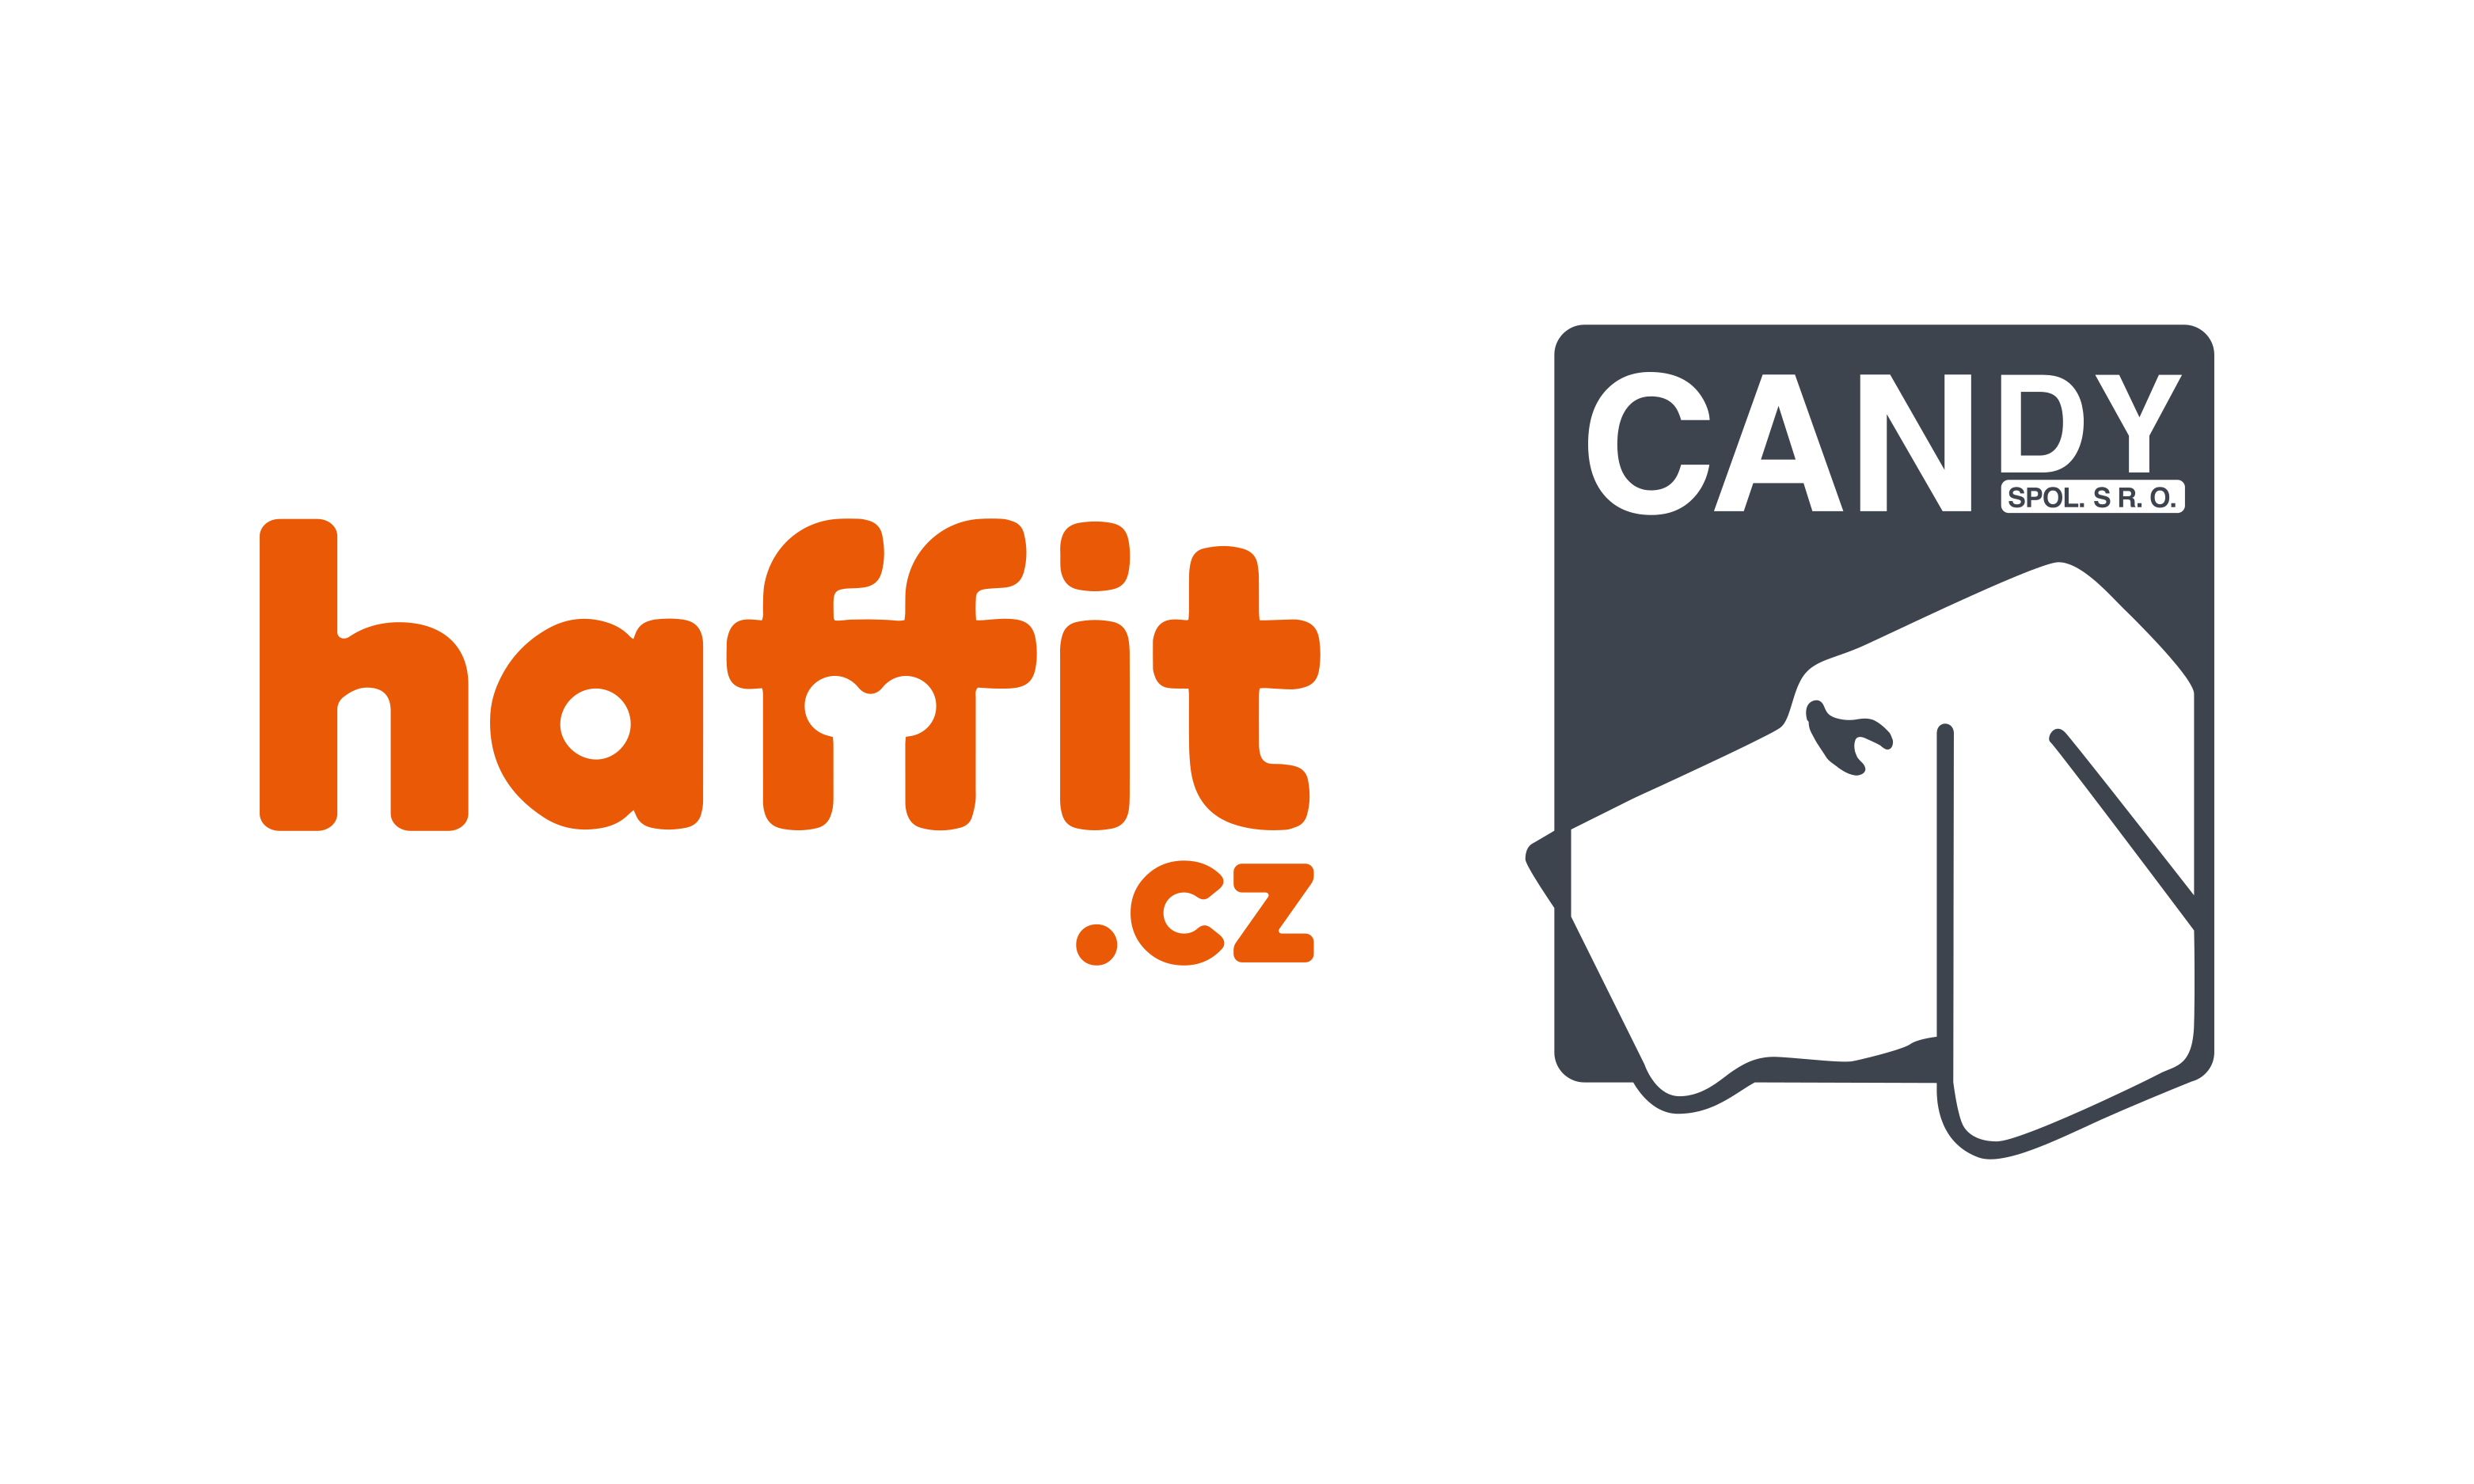 Haffit logo CANDY logo